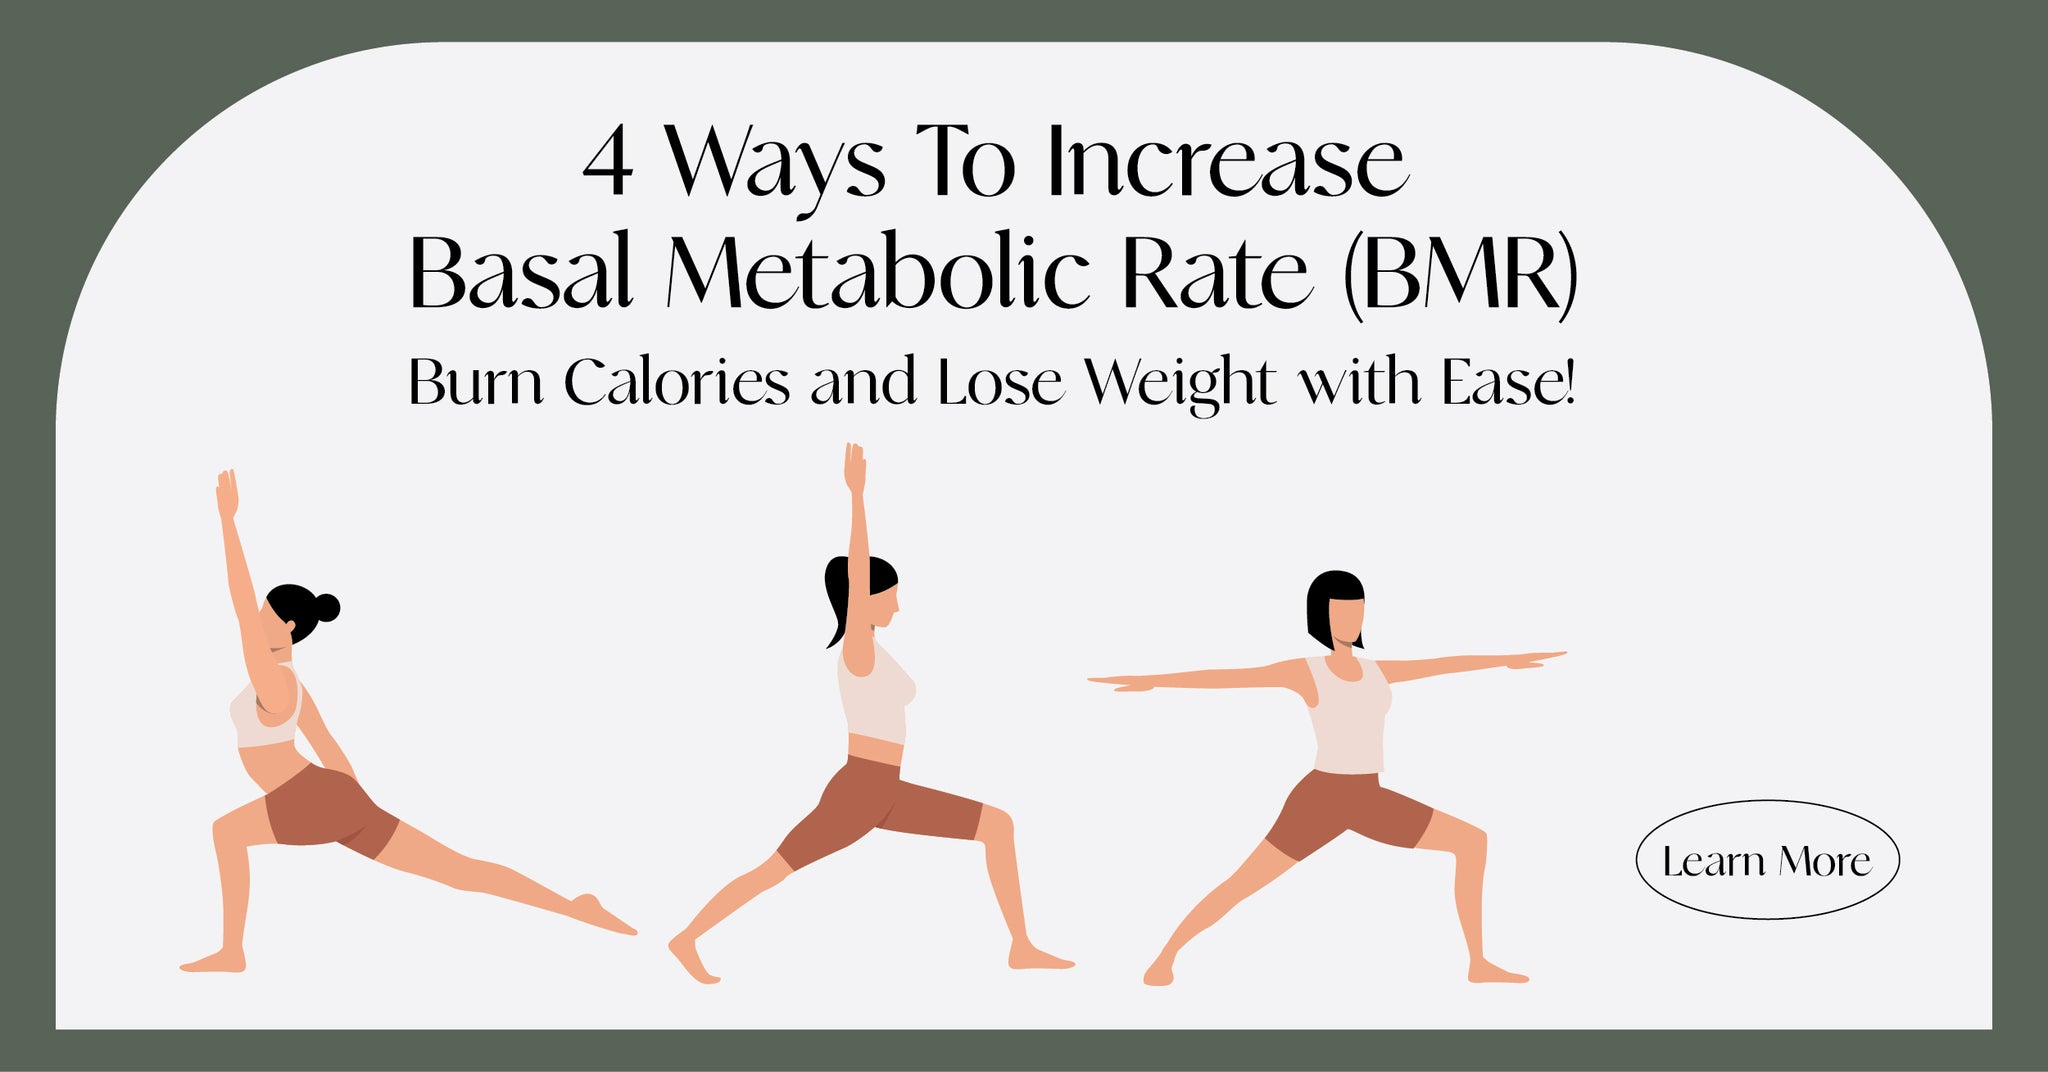 4 Ways to Increase Basal Metabolic Rate (BMR)